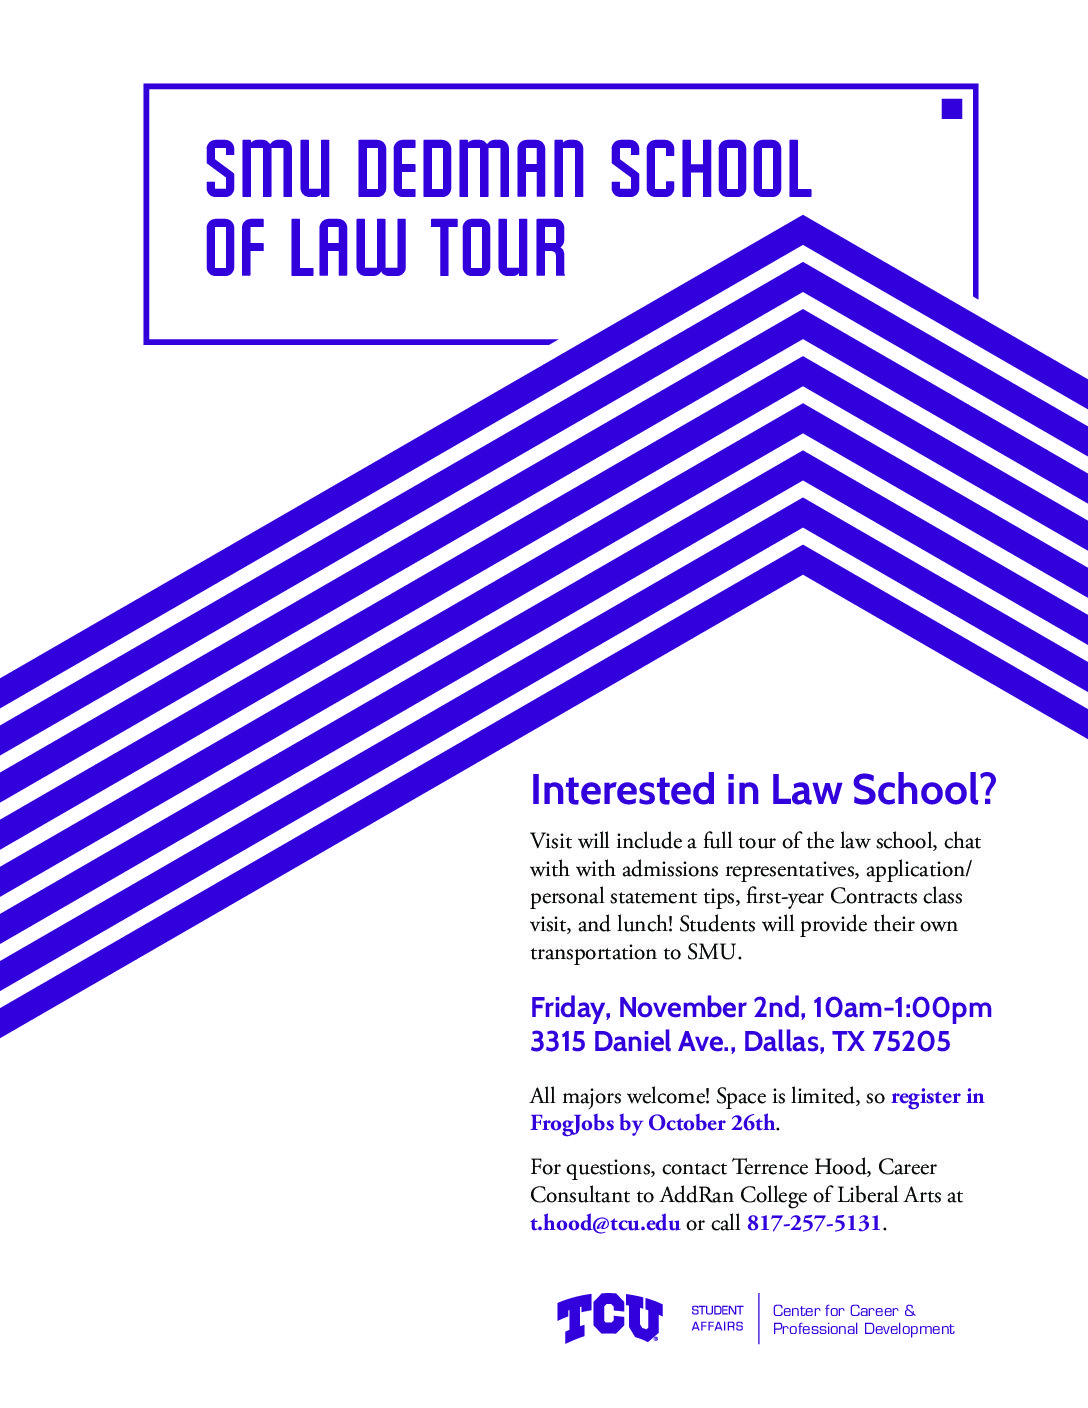 SMU Dedman School of Law Tour